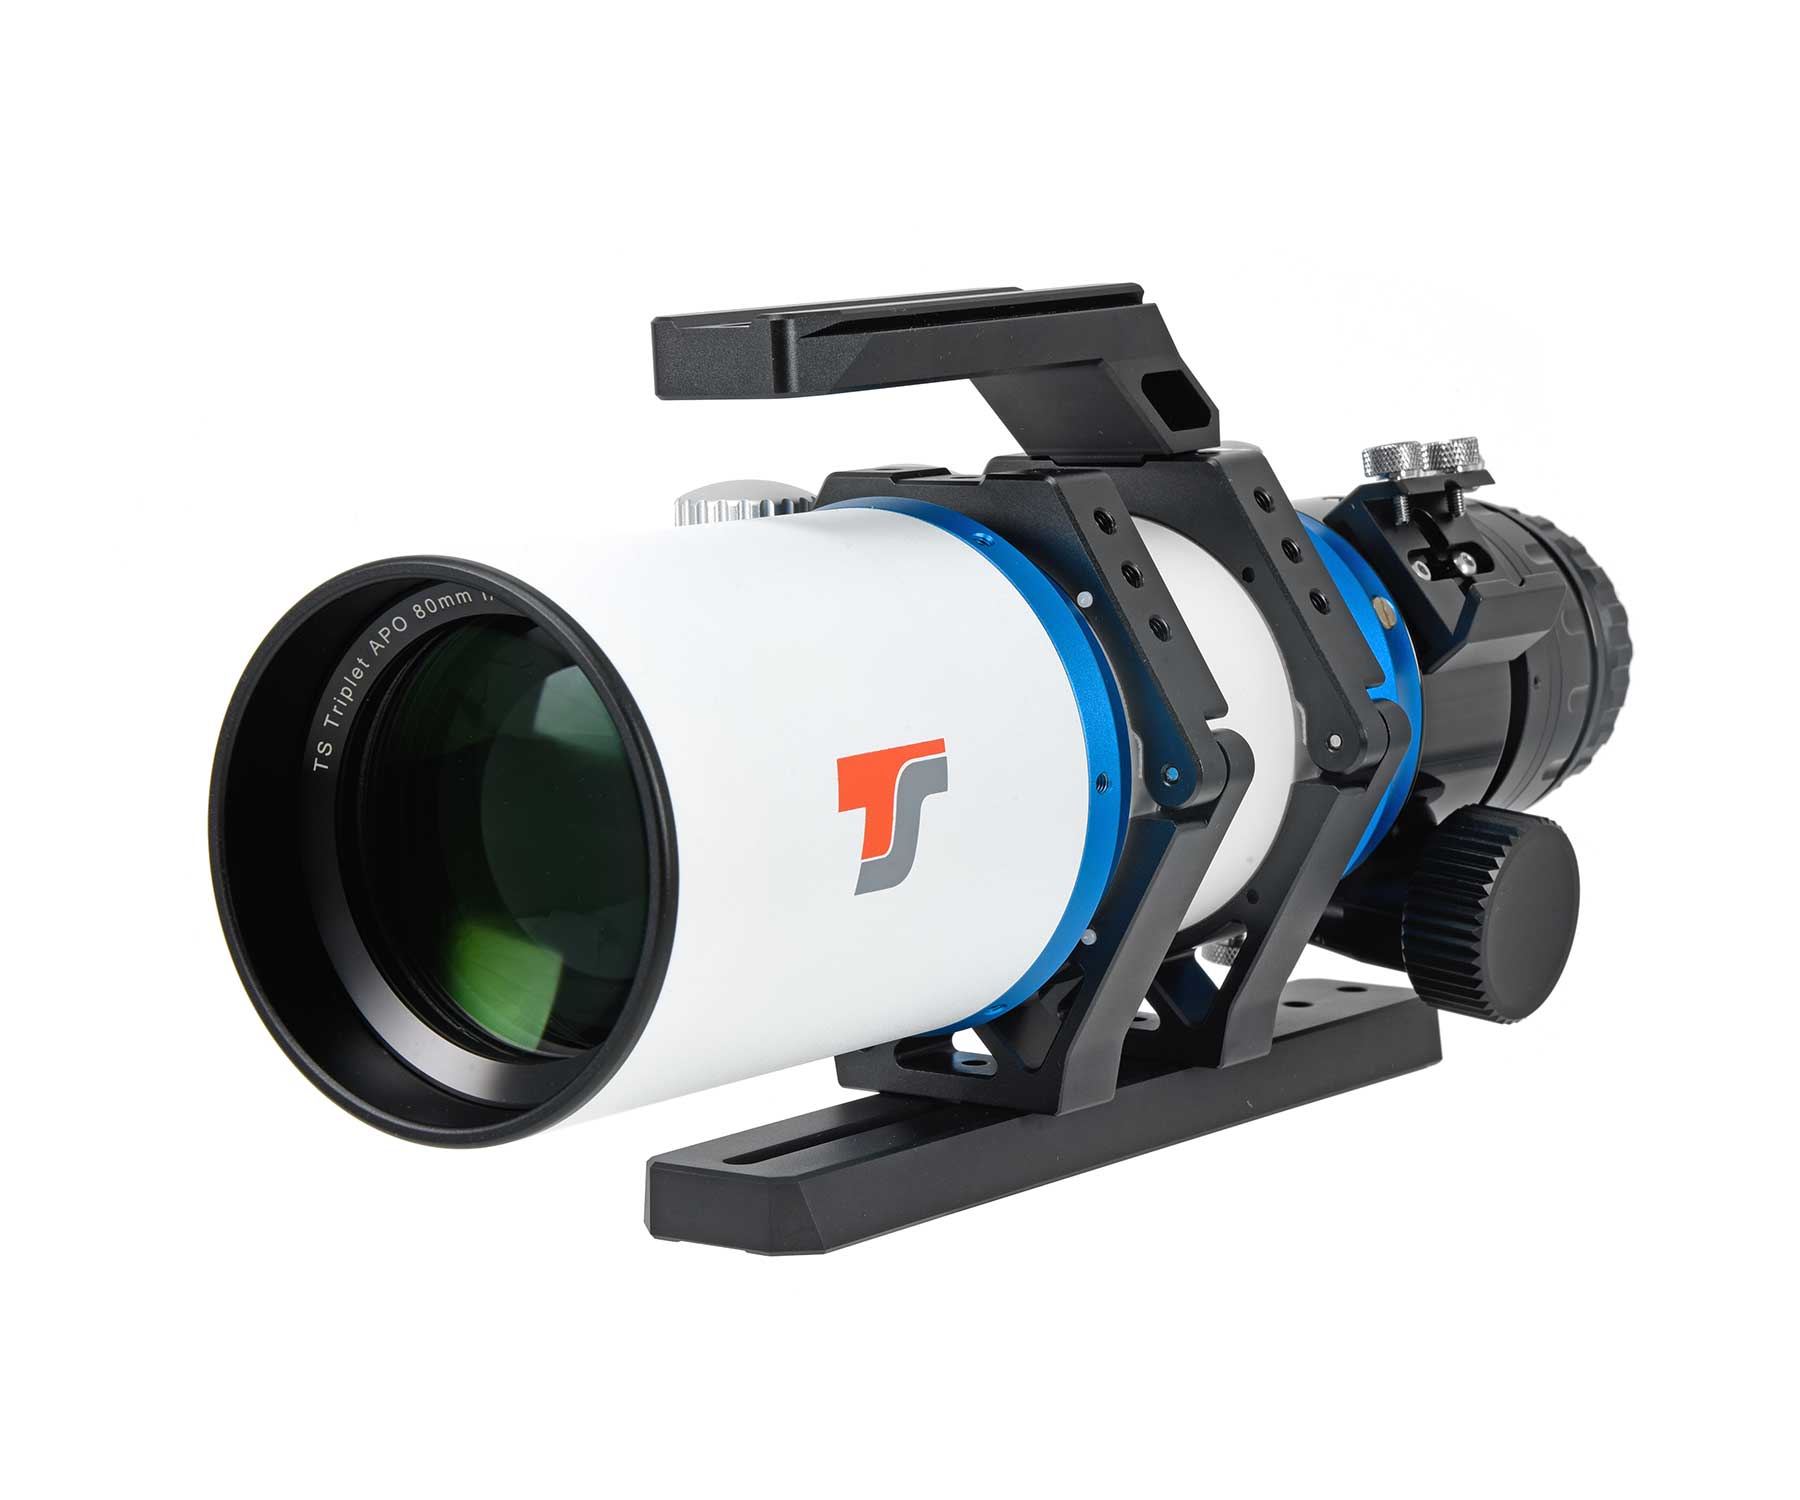   TS-Optics CF-APO 80 mm f/6 FPL55 Triplet APO Refractor with Certificate [EN]  